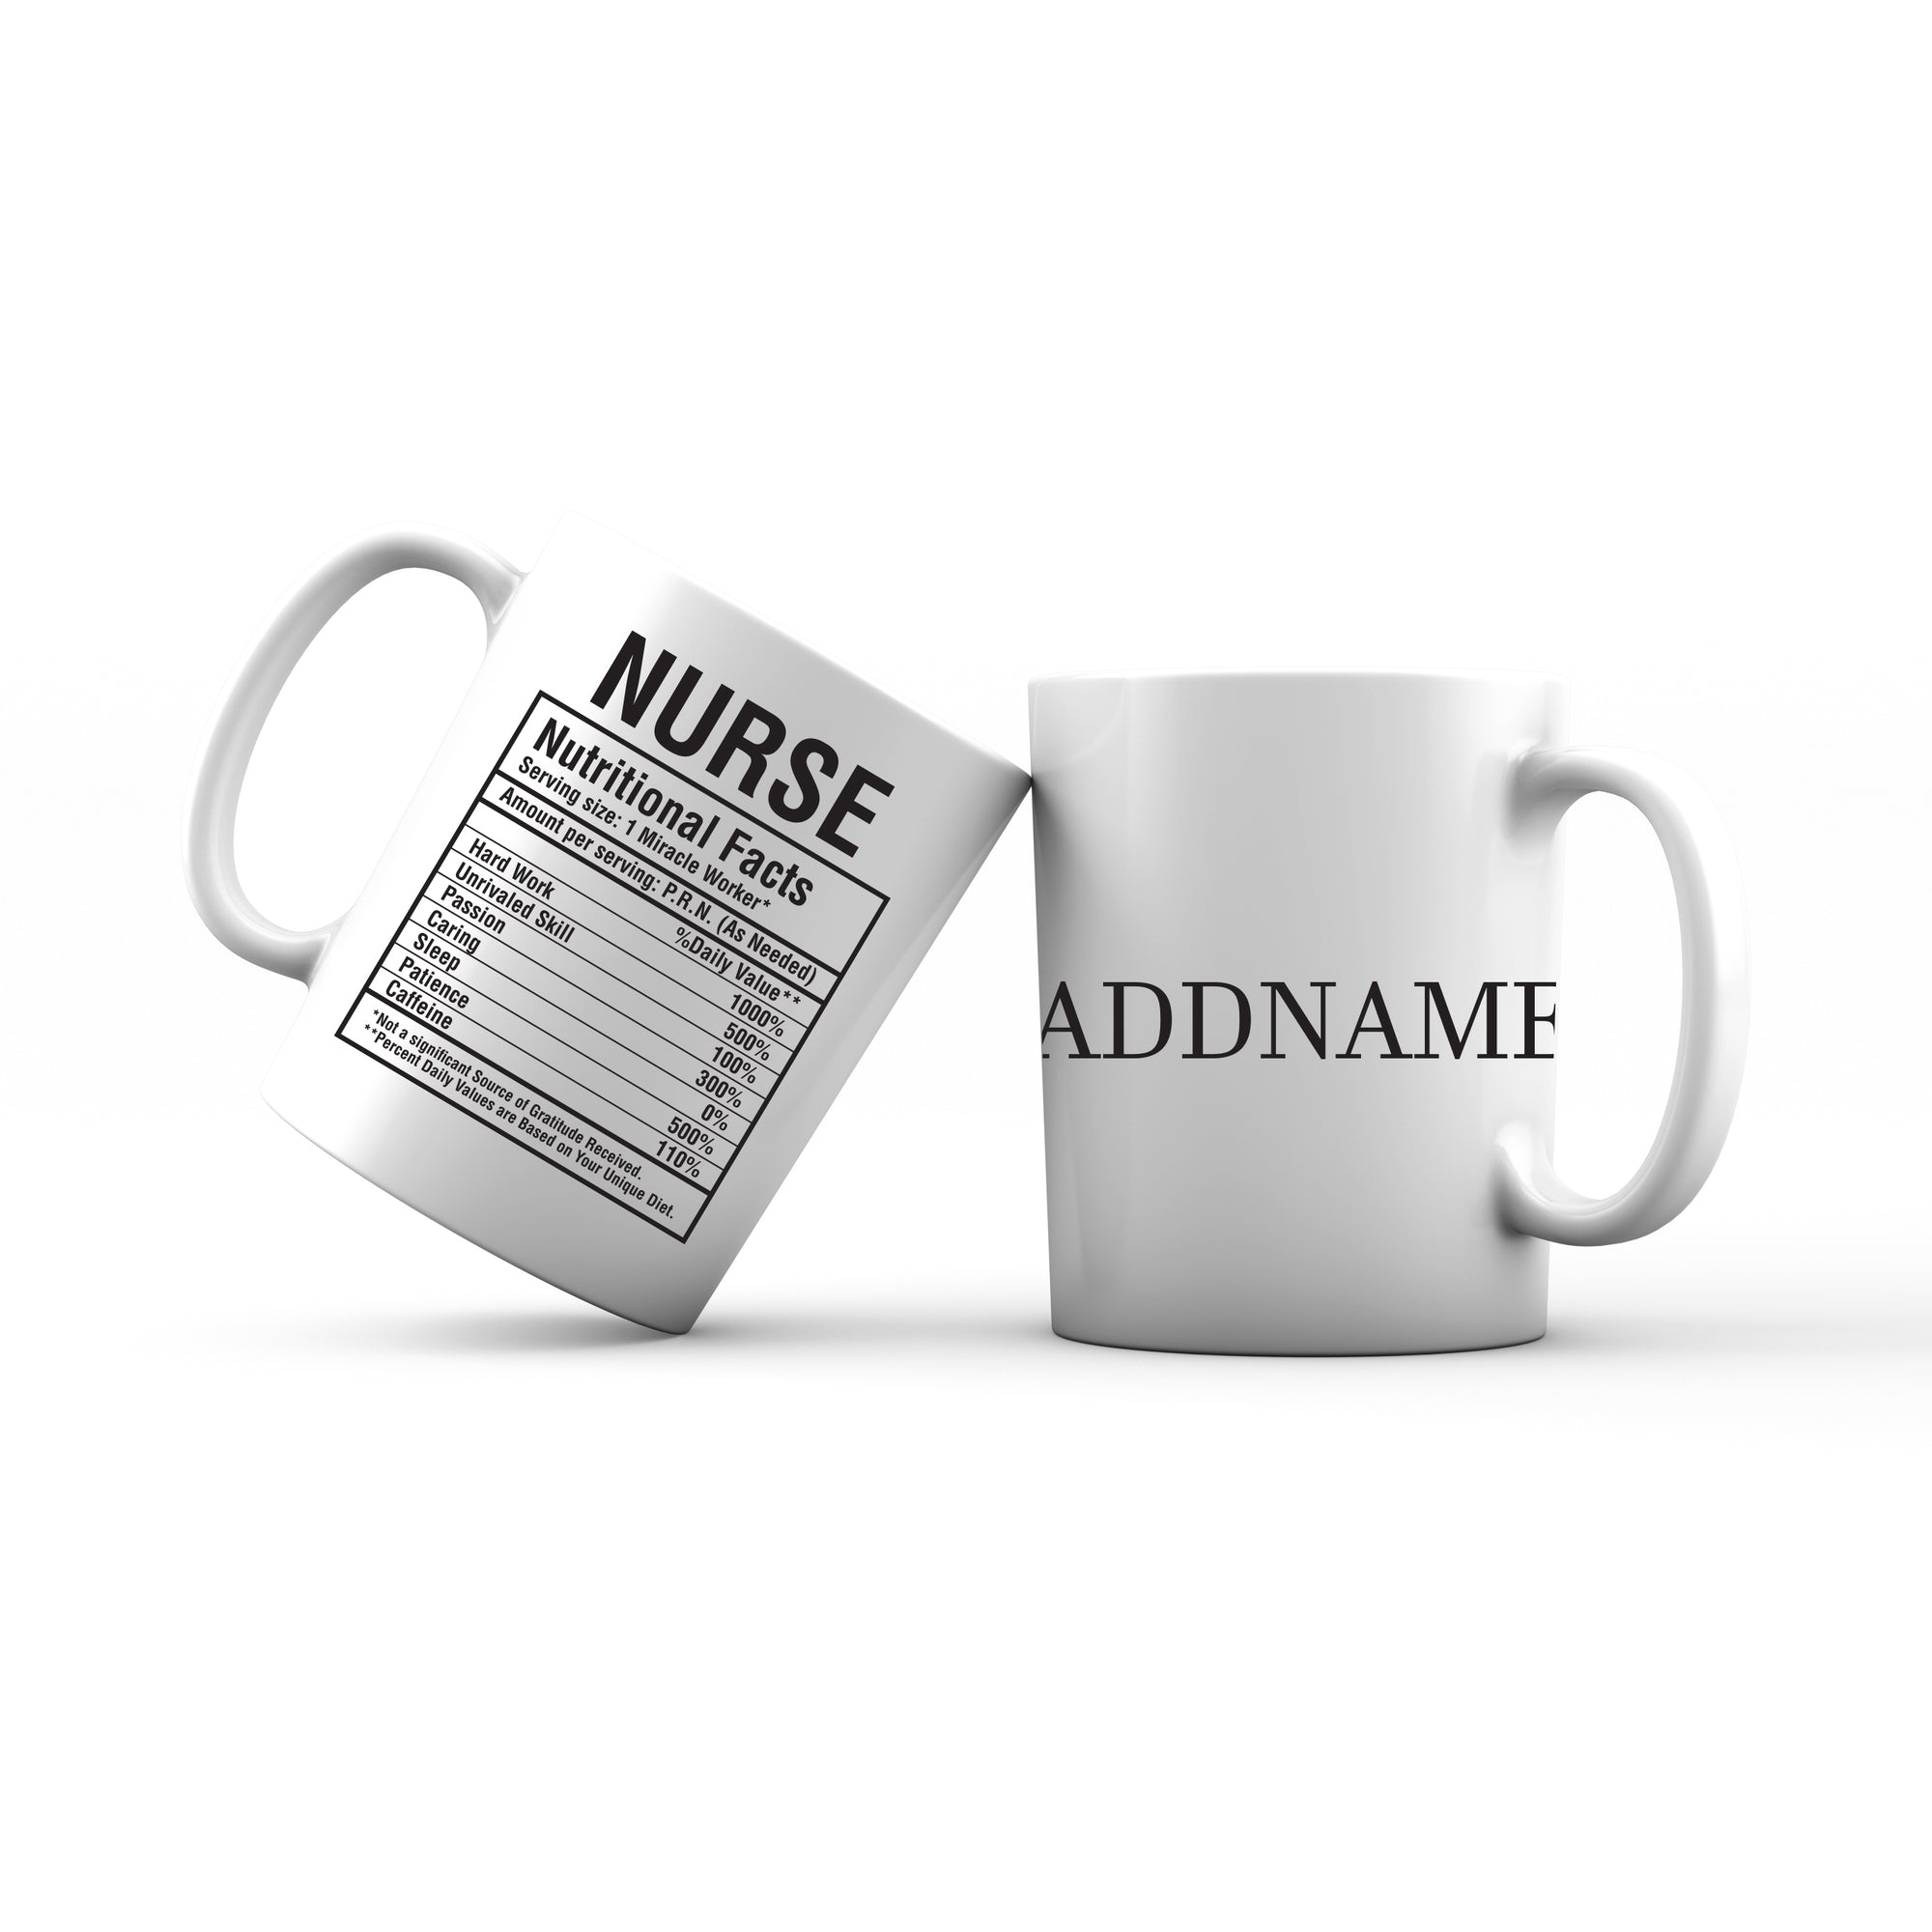 Nurse Nutritional Facts Mug